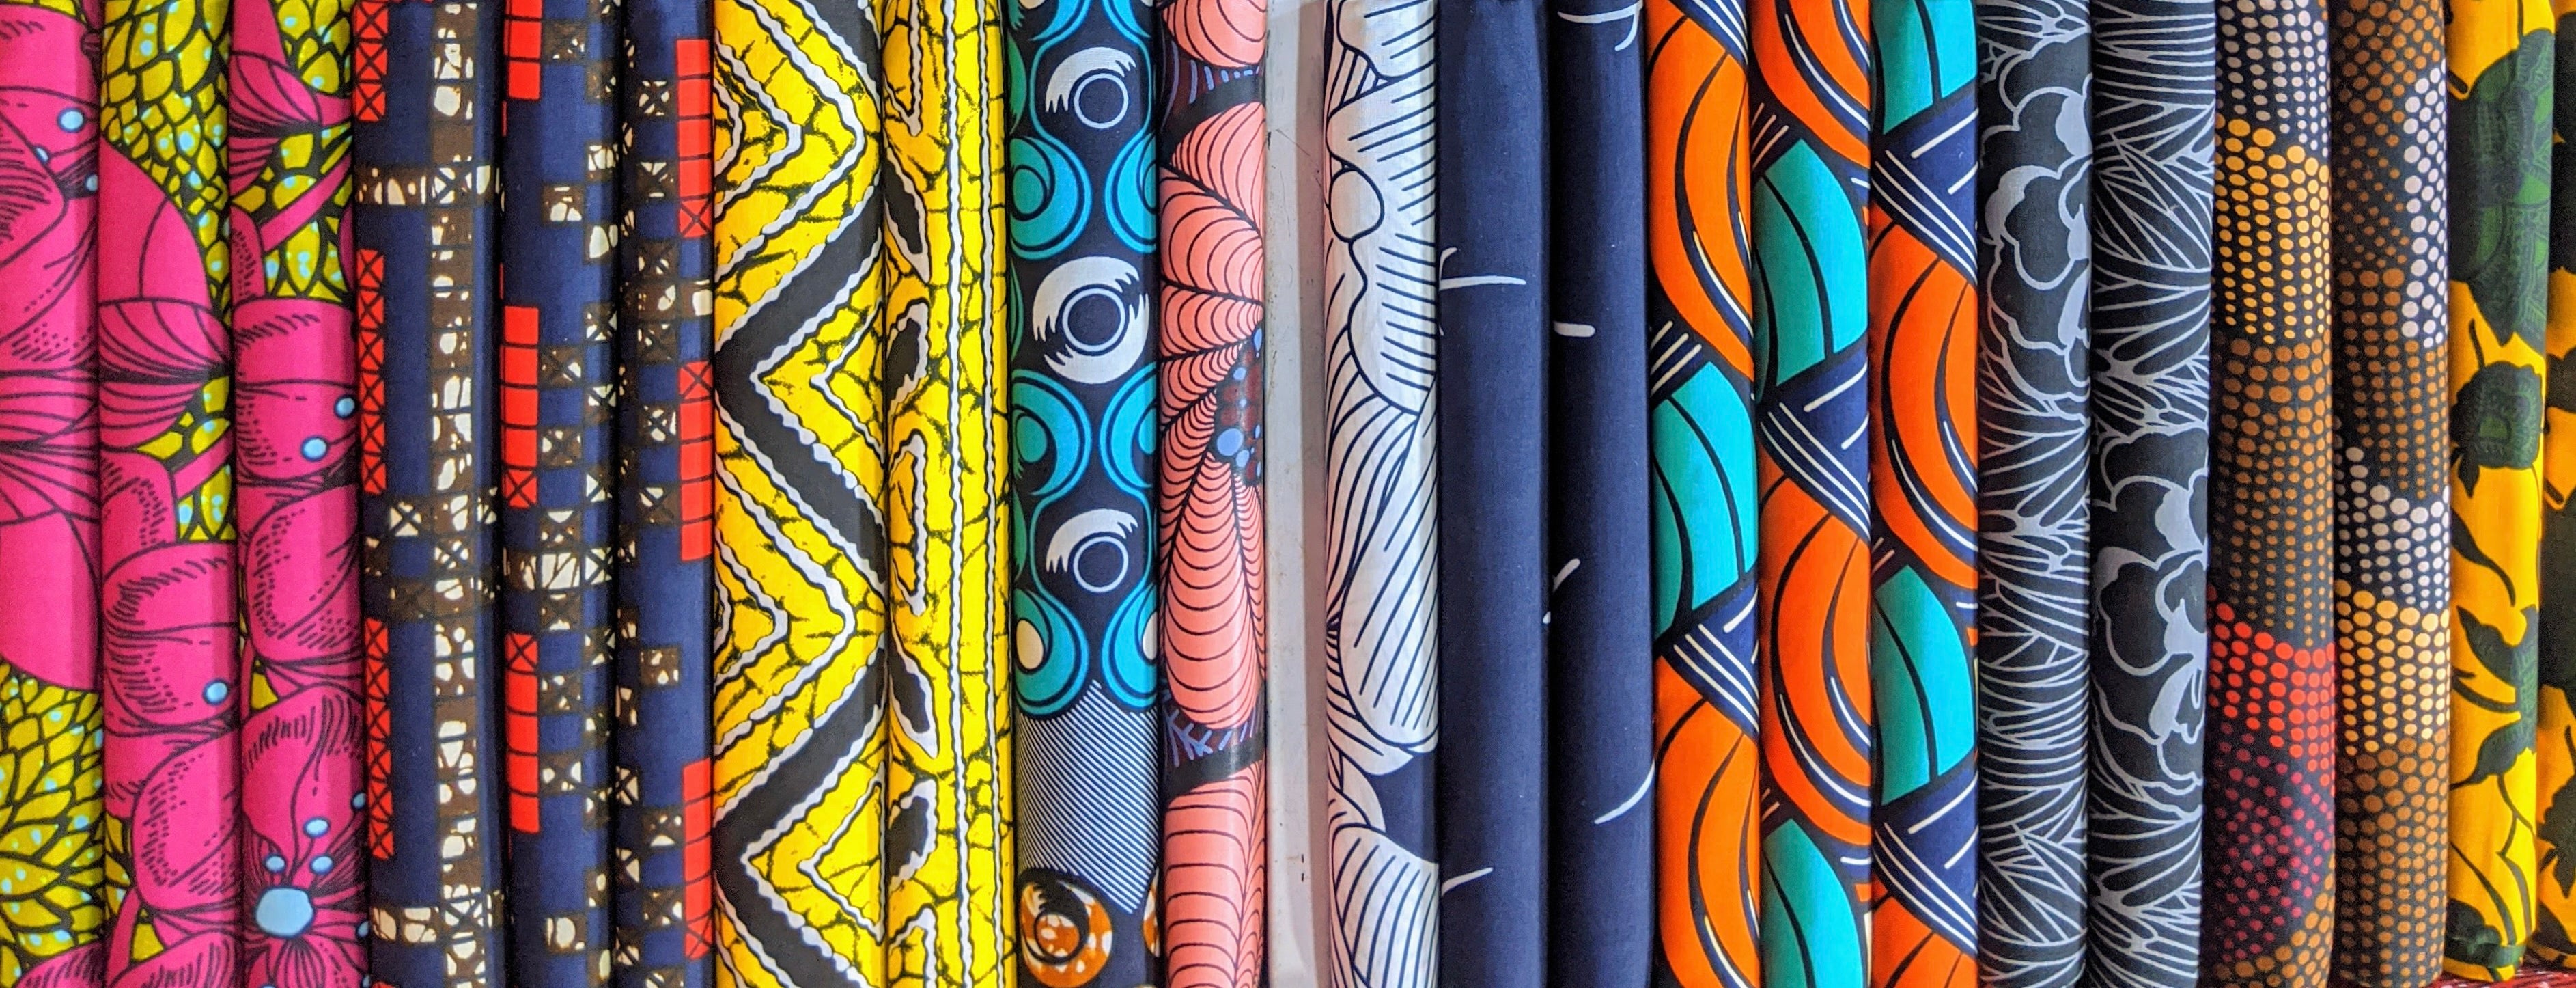 Closeup of stack of fabric